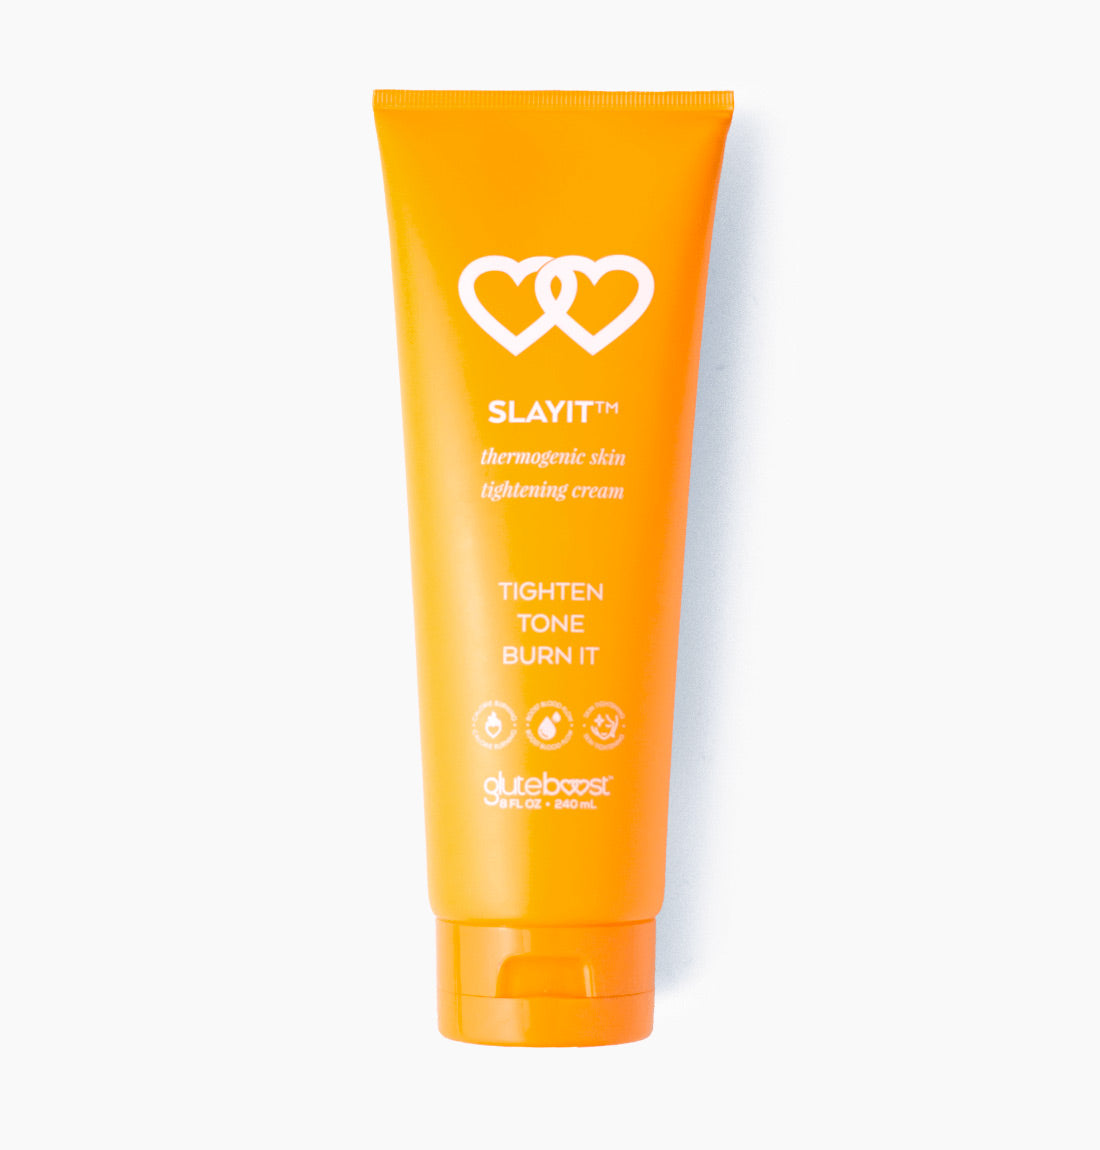 SlayIt™ Thermogenic Cream